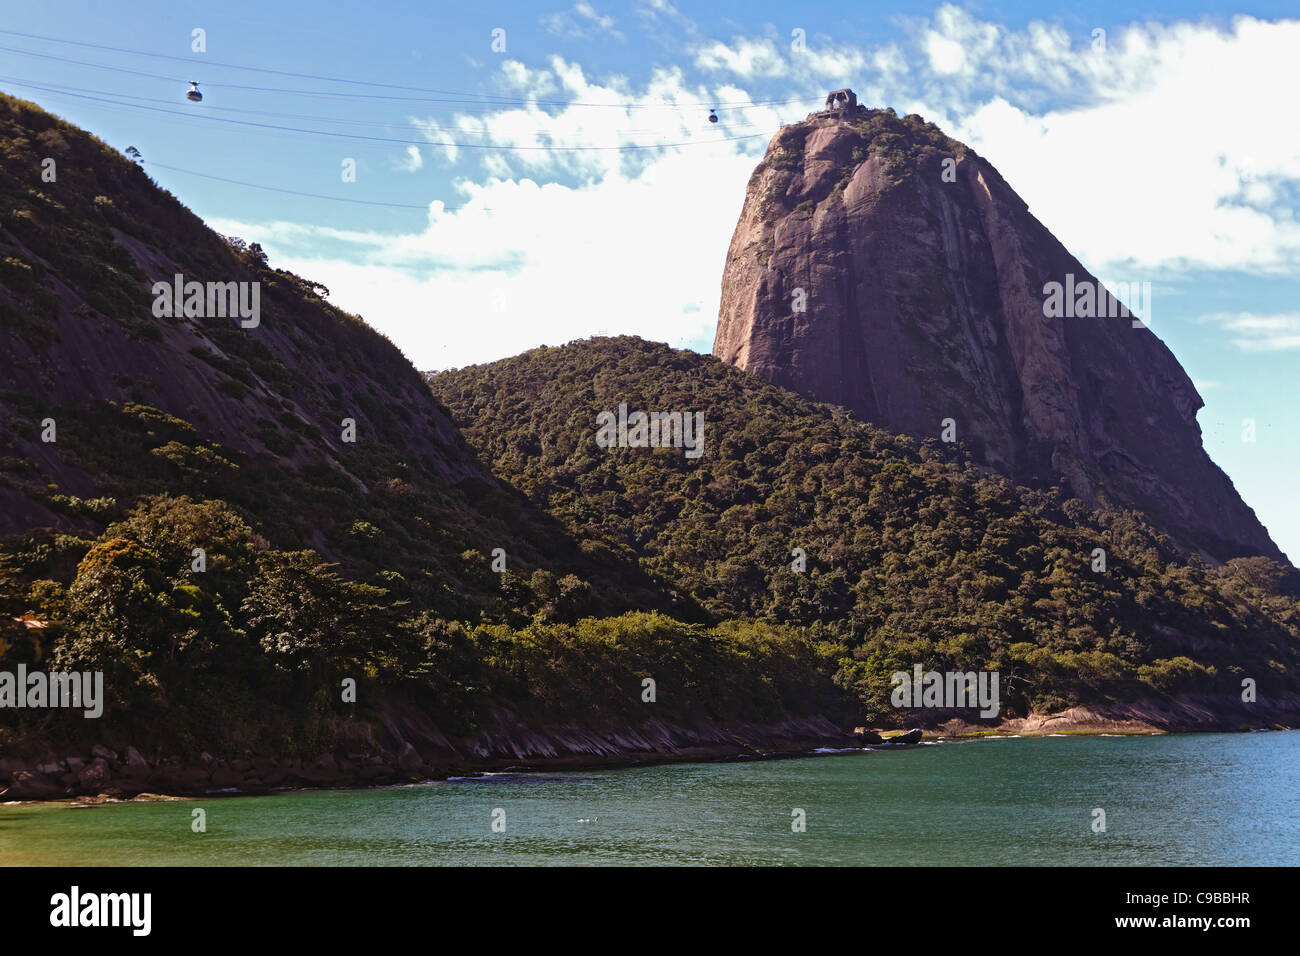 Low Angle View of the Sugarloaf Mountain from Vermelha Beach, Rio de Janeiro, Brazil Stock Photo